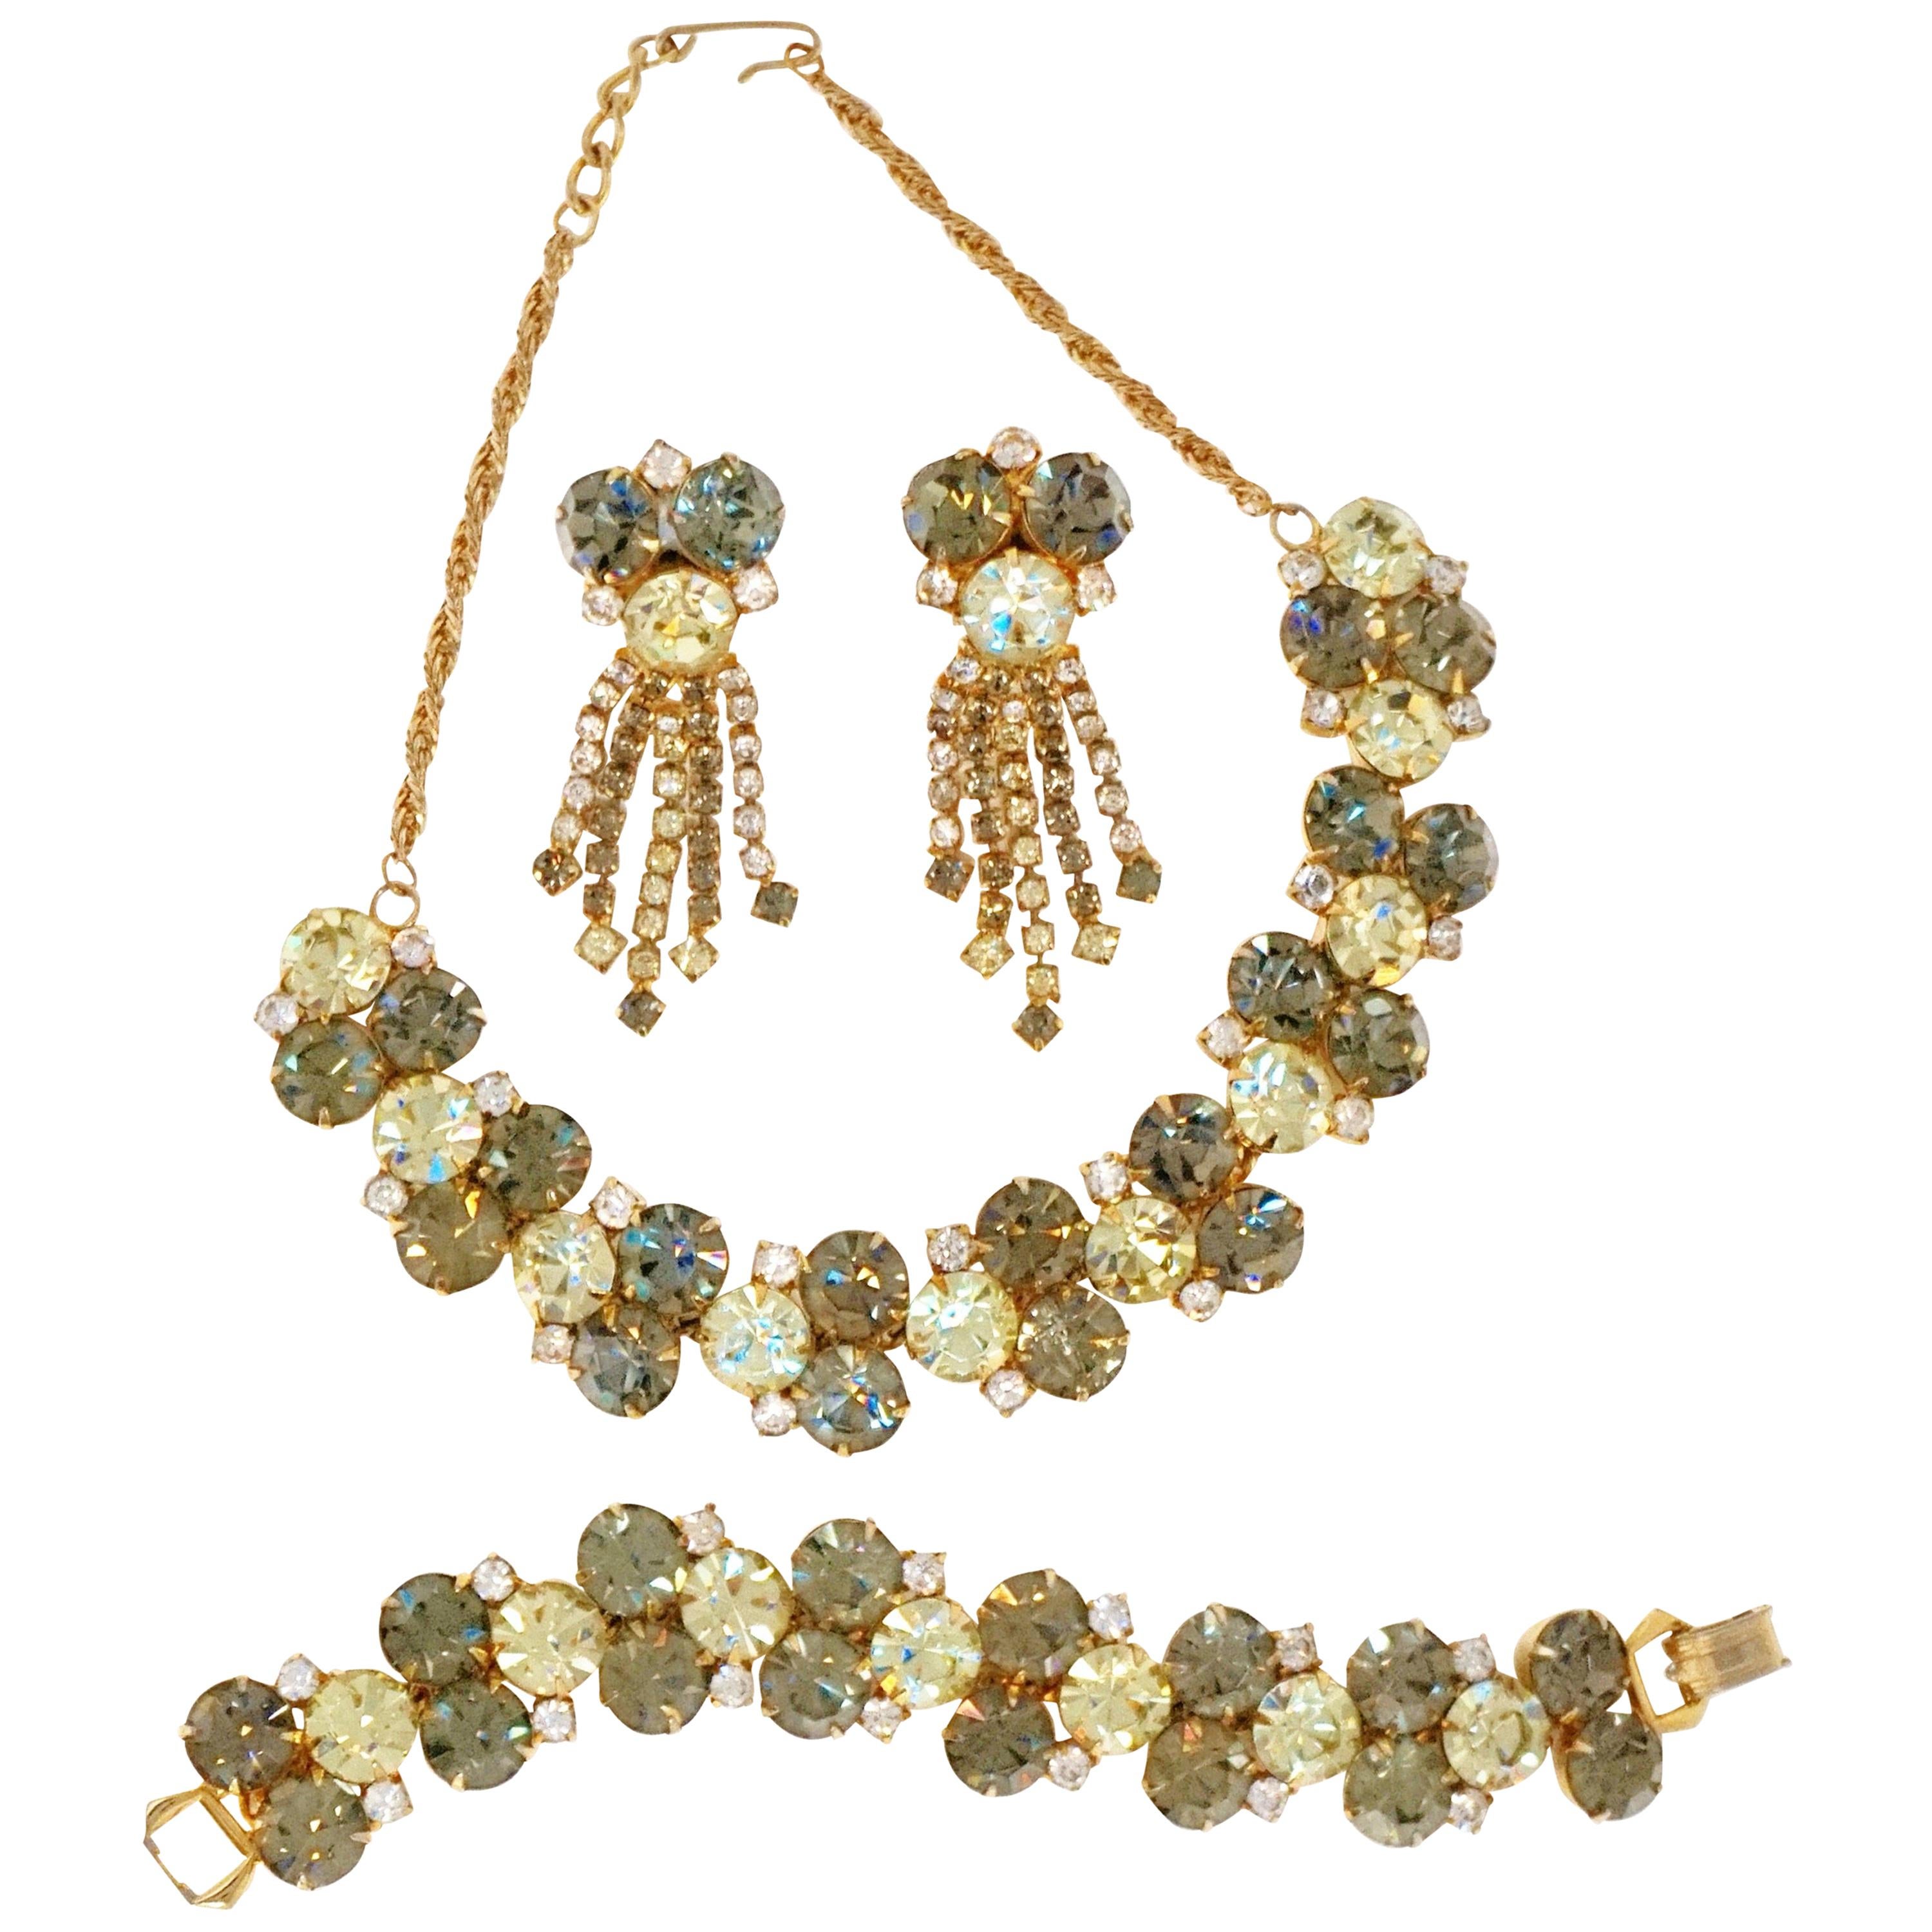 1960s Hobé Green Rhinestone Parure with Necklace, Bracelet & Earrings, Signed